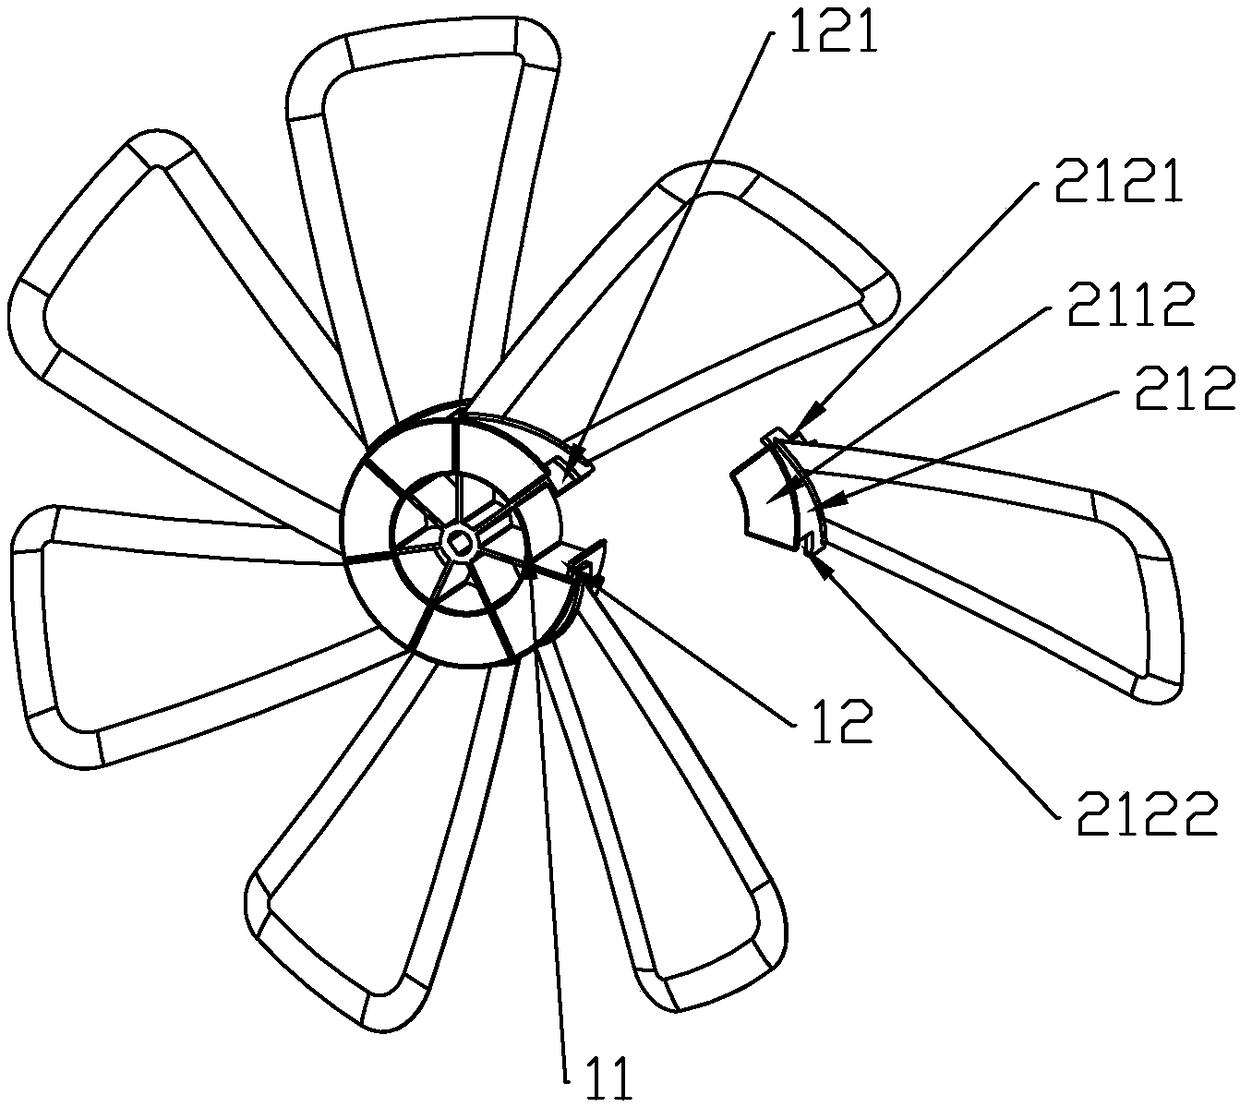 Exhaust fan blade and exhaust fan with exhaust fan blade